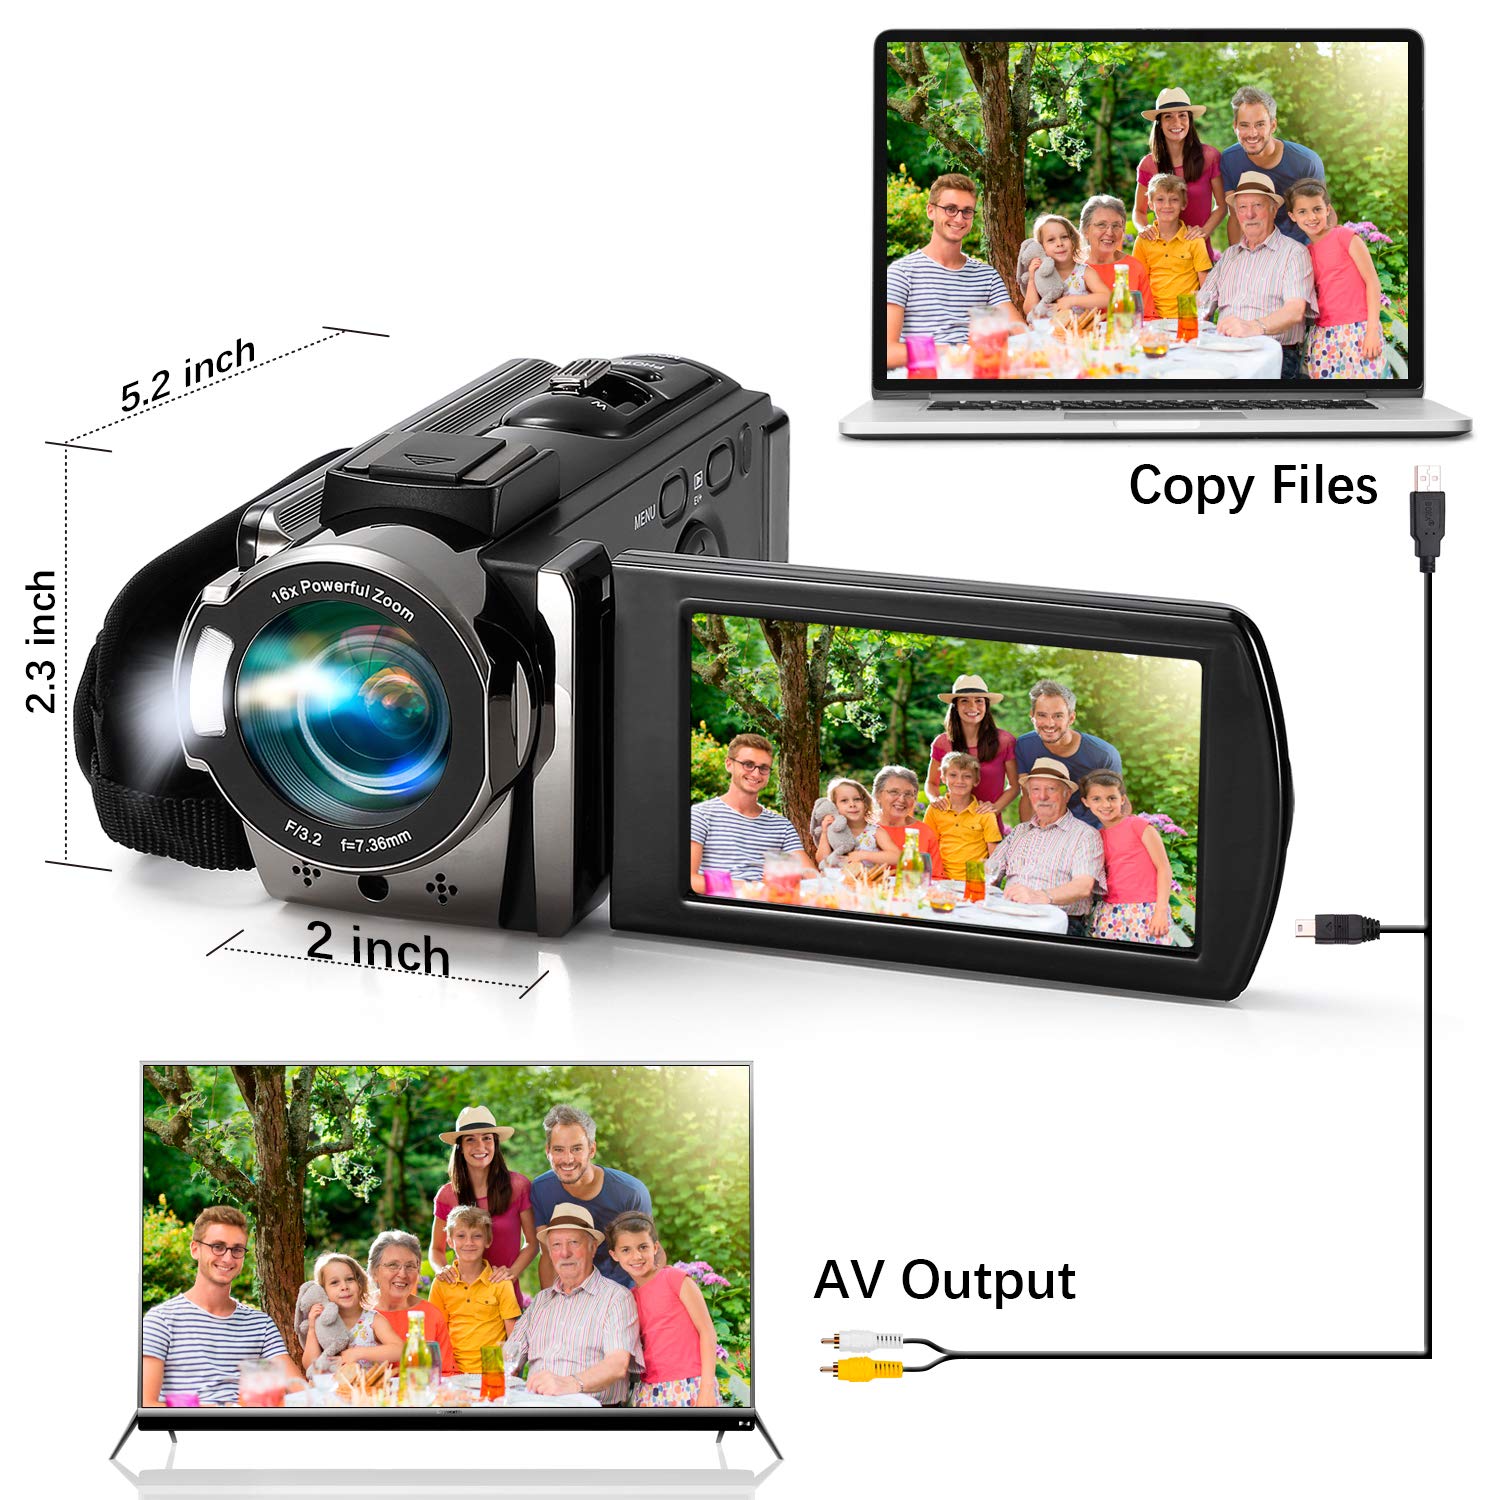 kimire Video Camera Camcorder Digital Camera Recorder Full HD 1080P 15FPS 24MP 3.0 Inch 270 Degree Rotation LCD 16X Digital Zoom Camcorder Camera with 2 Batteries(Black)